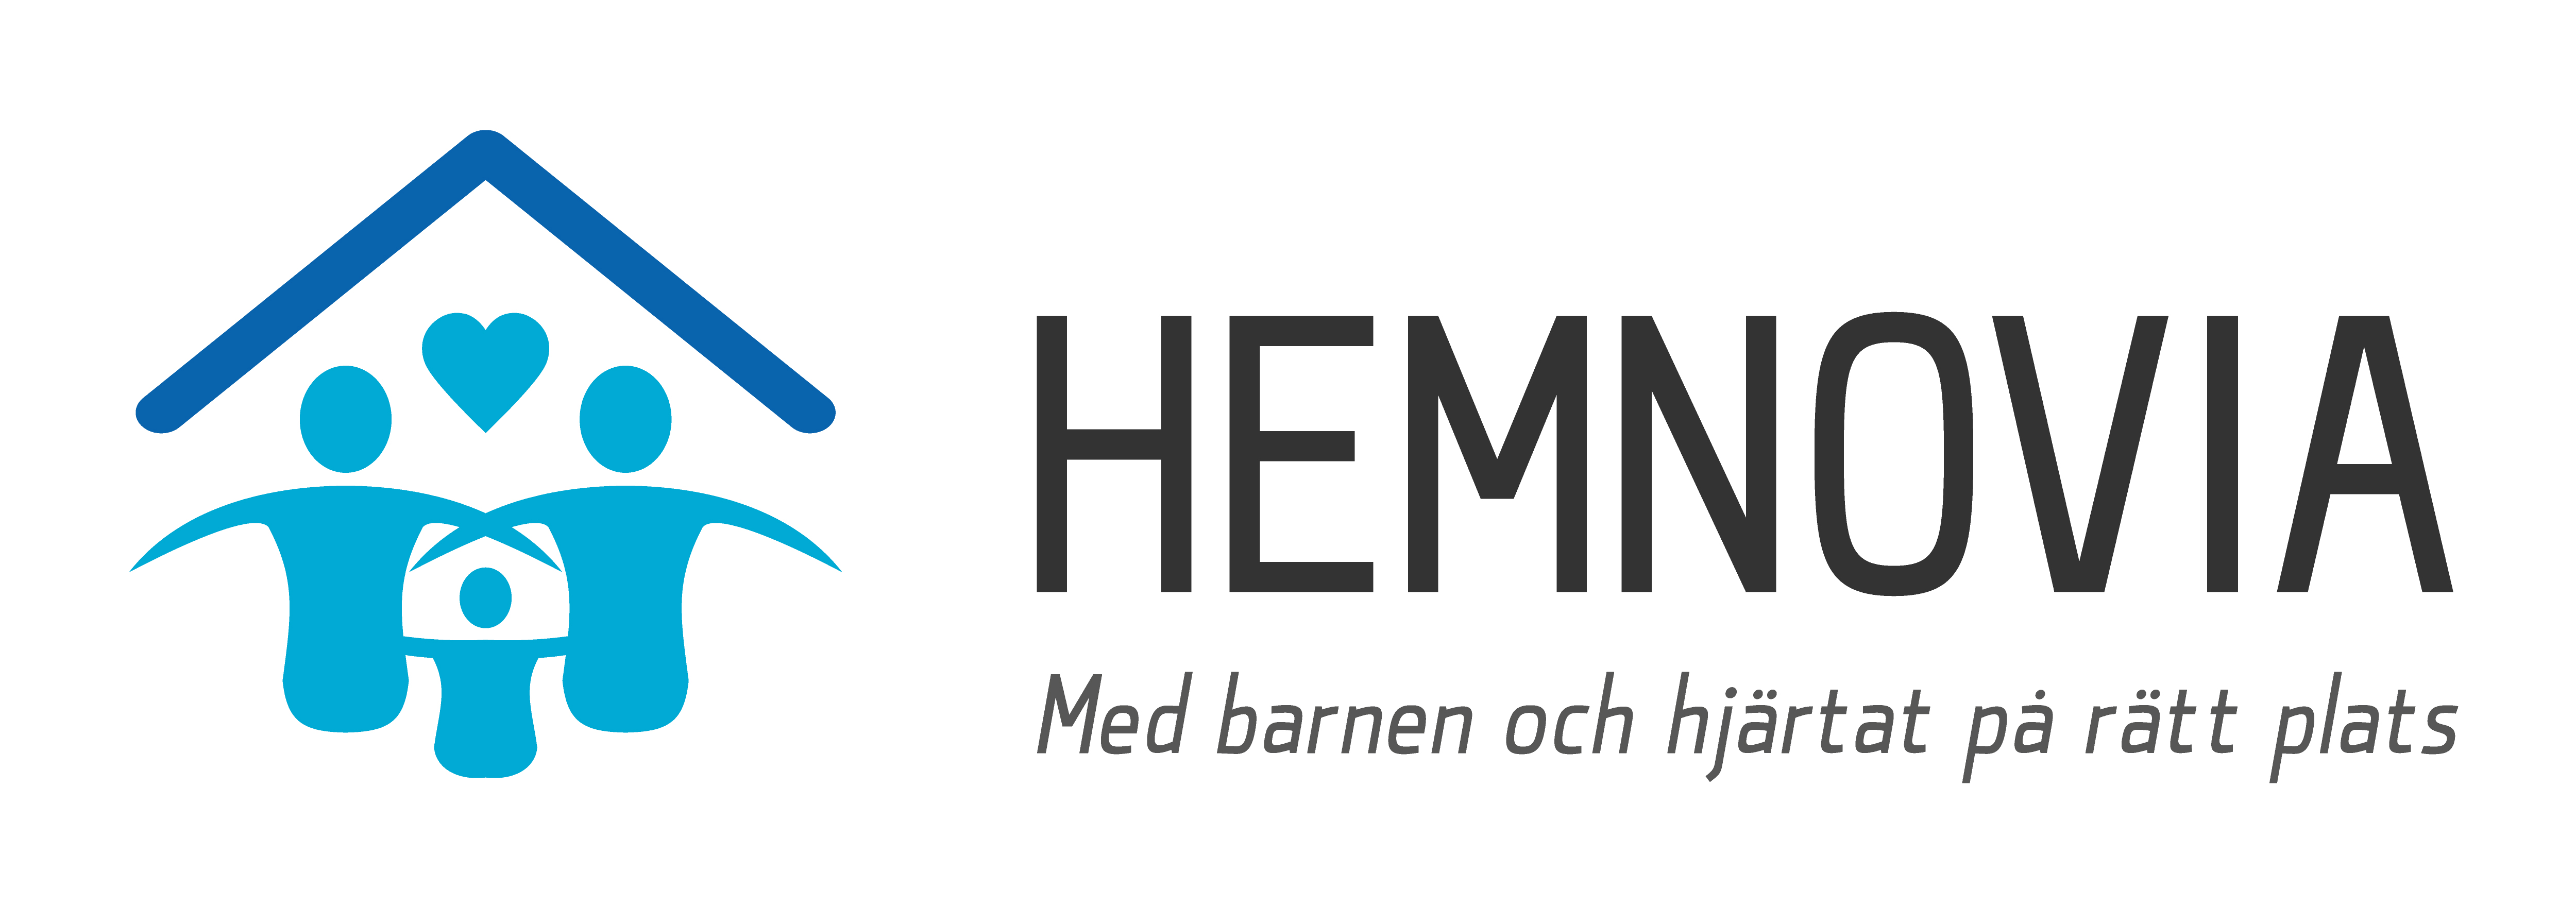 Hemnovia - Engagerat familjehem i Halmstad